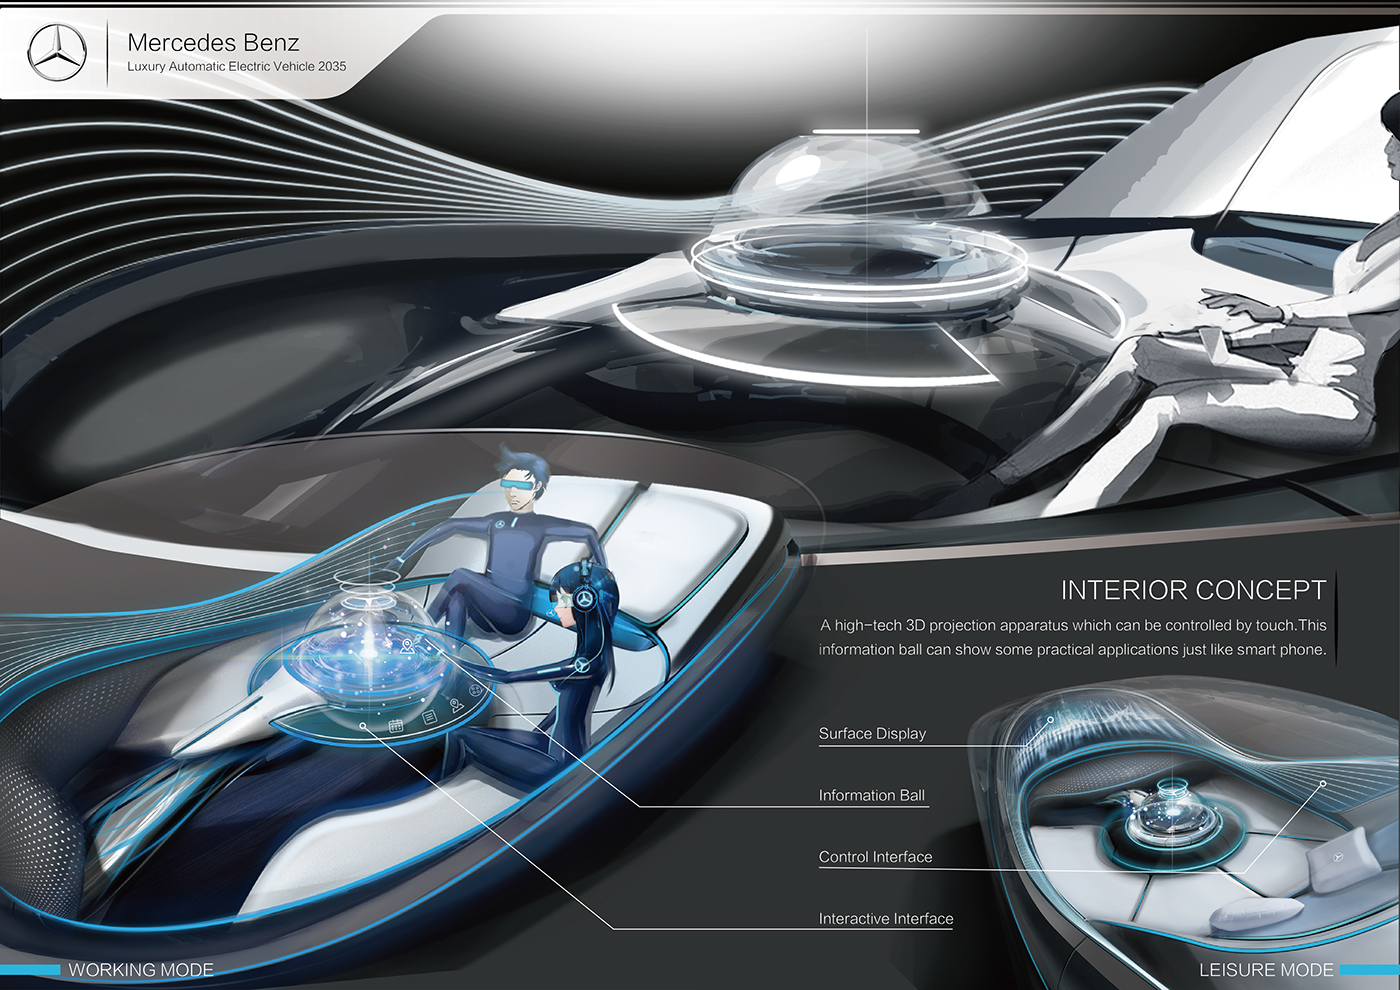 Benz Luxury Concept 2035 on Behance